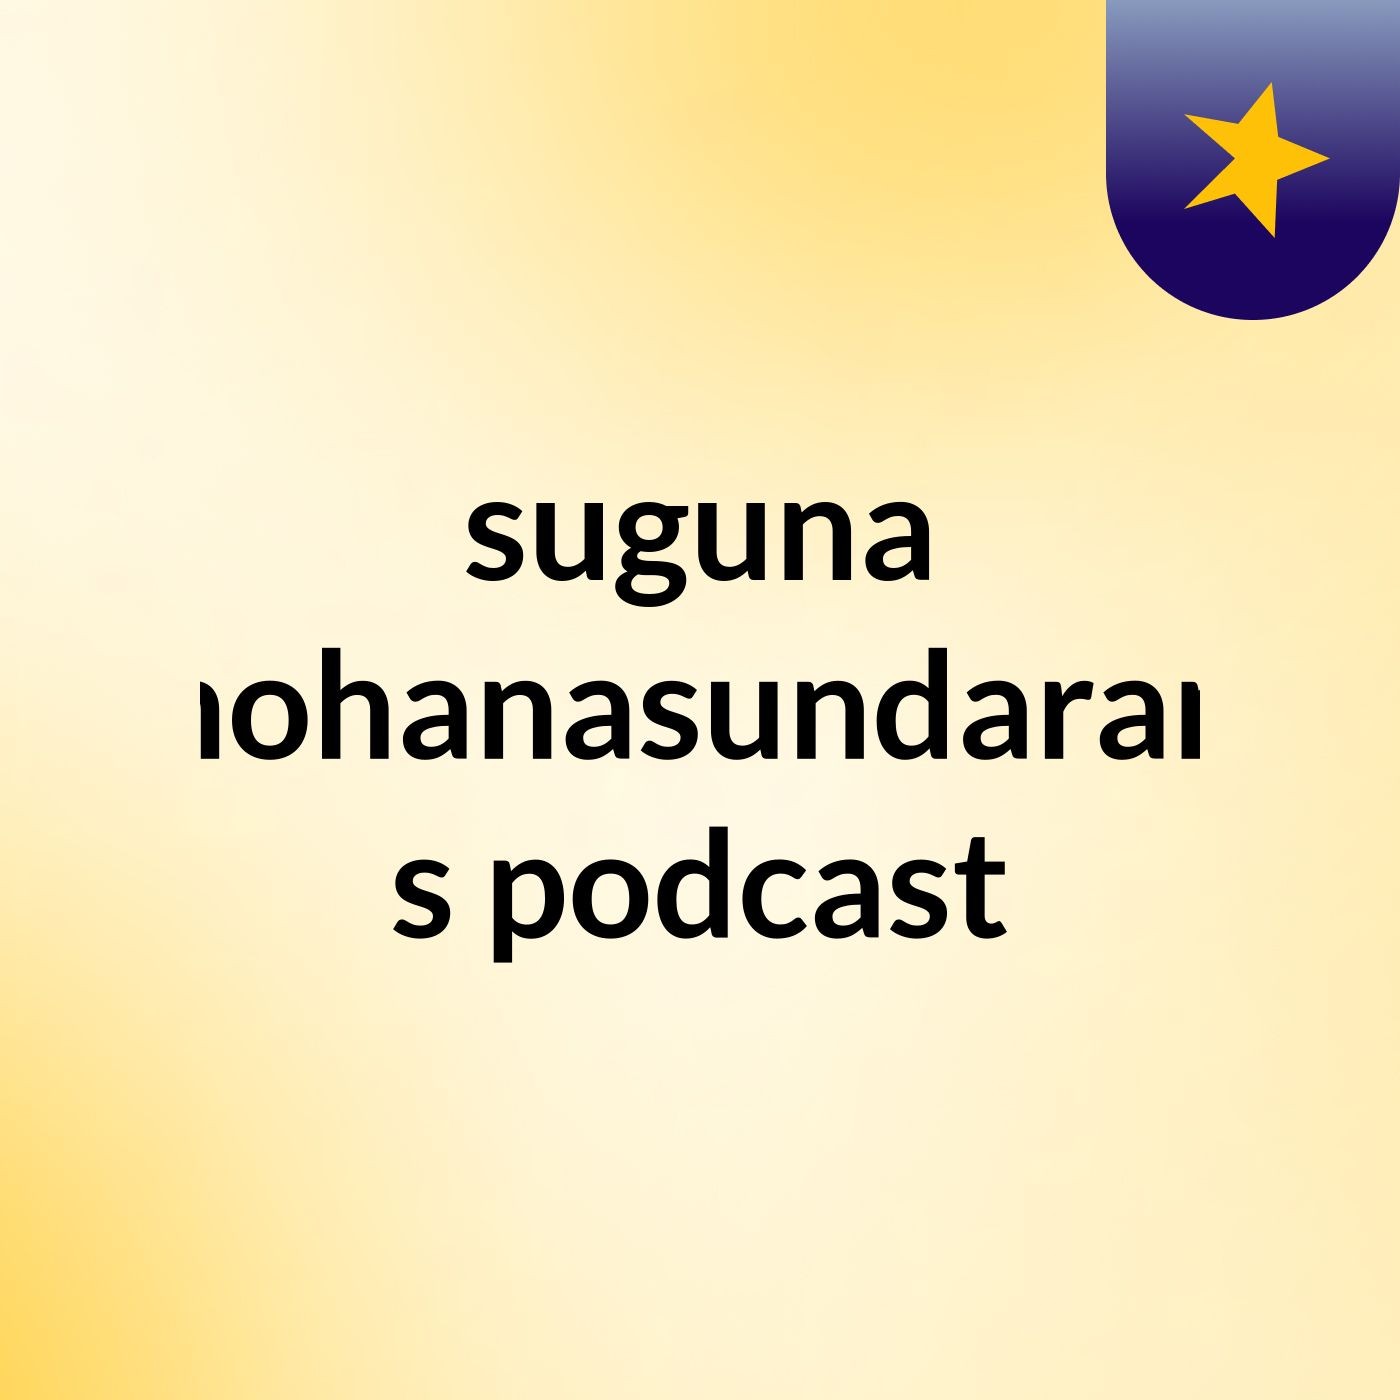 Episode 7 - suguna mohanasundaram's podcast